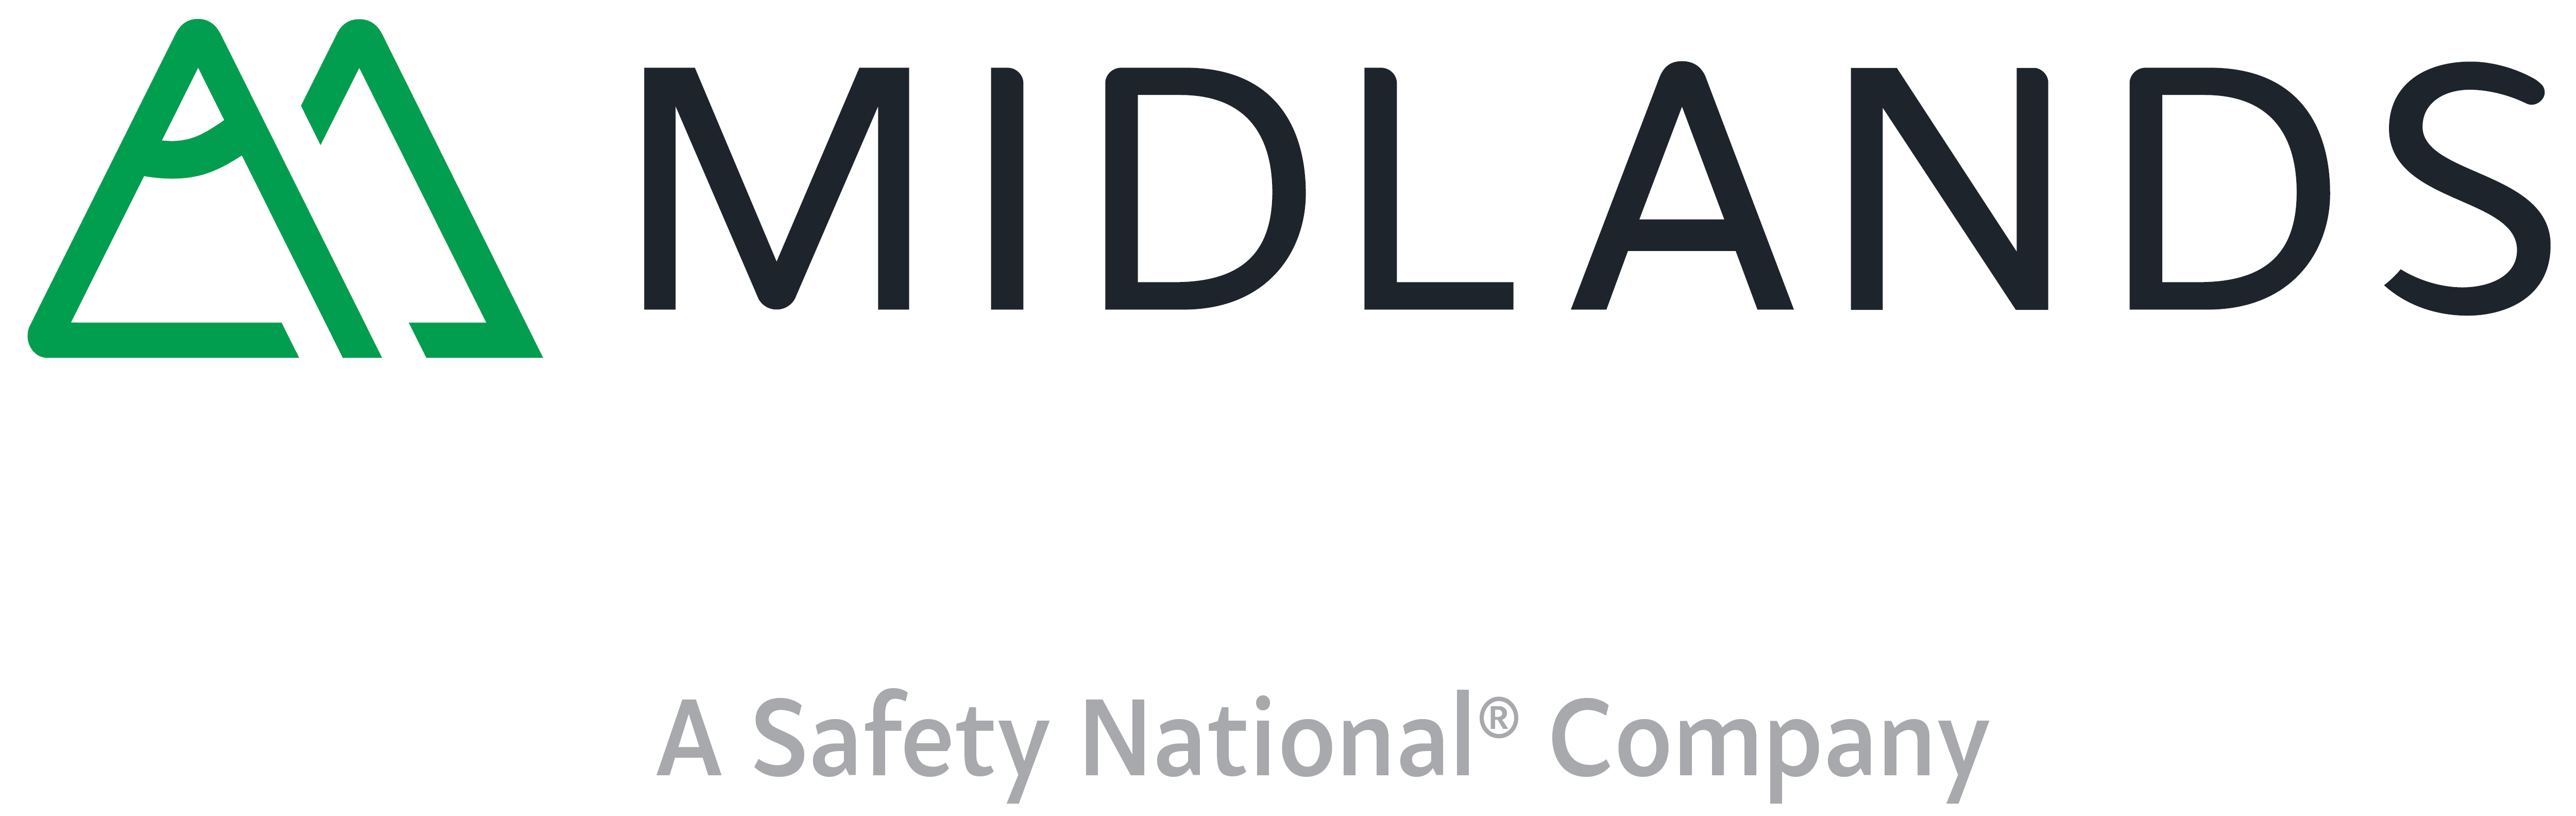 Midlands, a Safety National Company